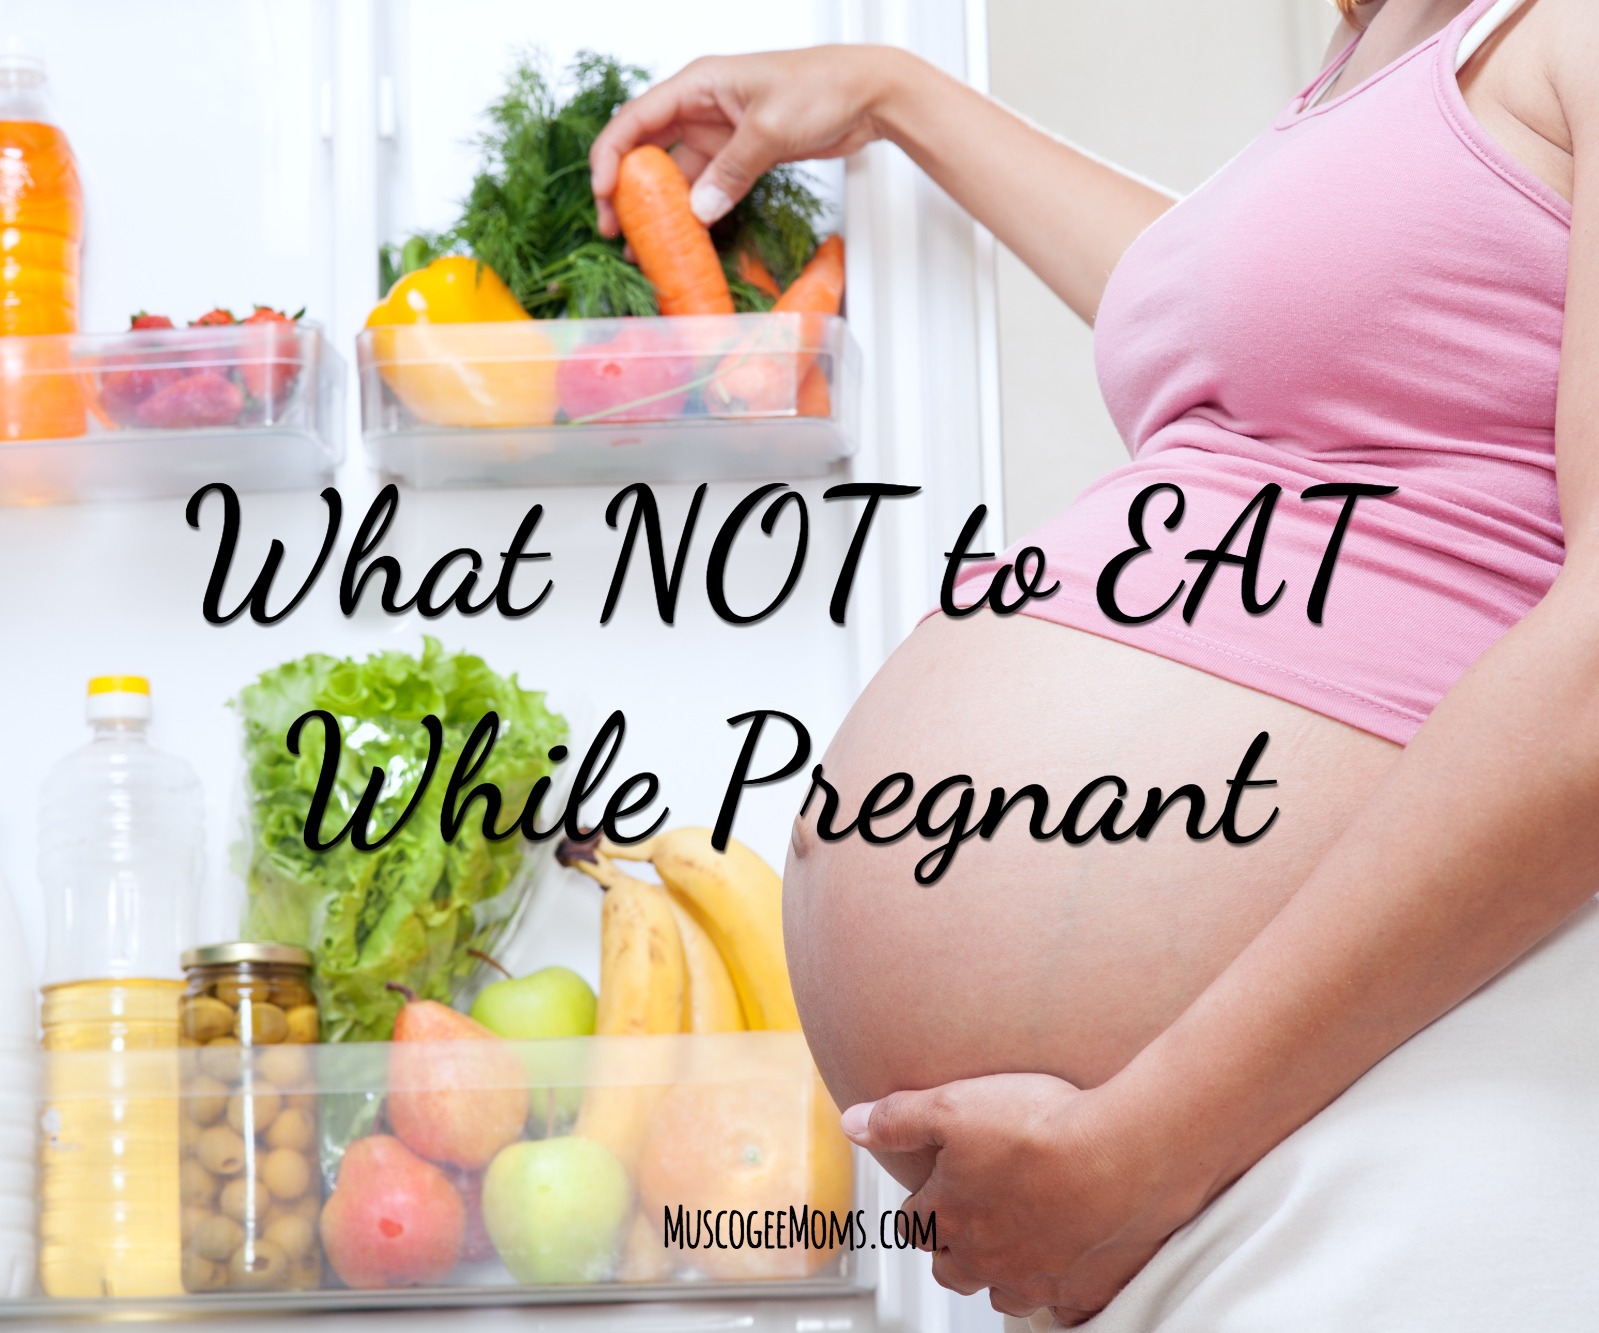 Six Foods Pregnant Women Should Avoid